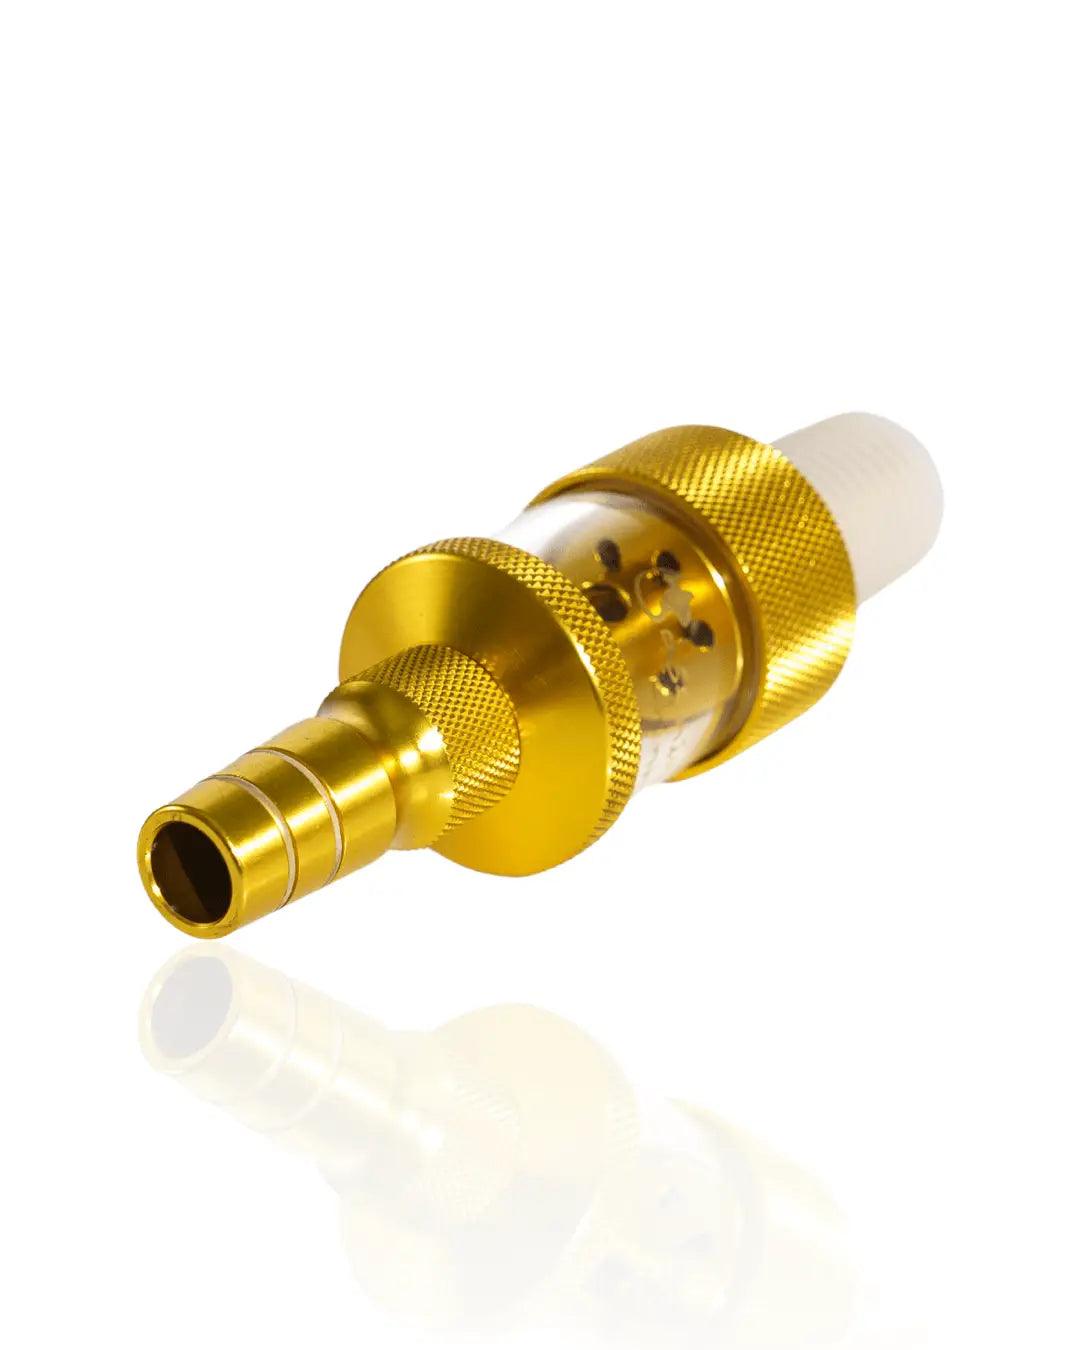 Molassefänger mit Adapter & Ultra Grip Gold - Dschinni GmbH